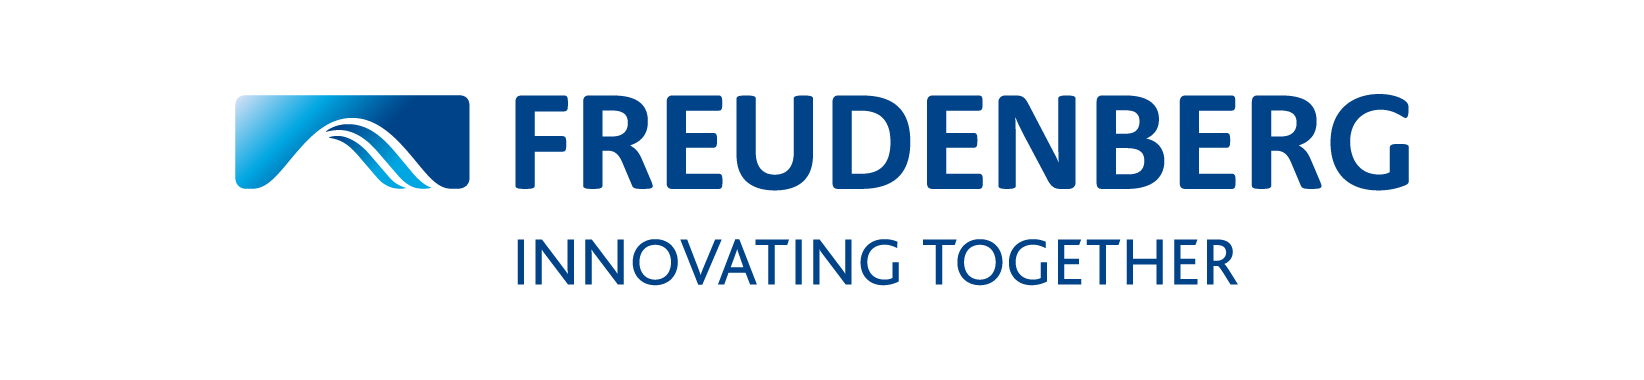 Freudenberg_Logo